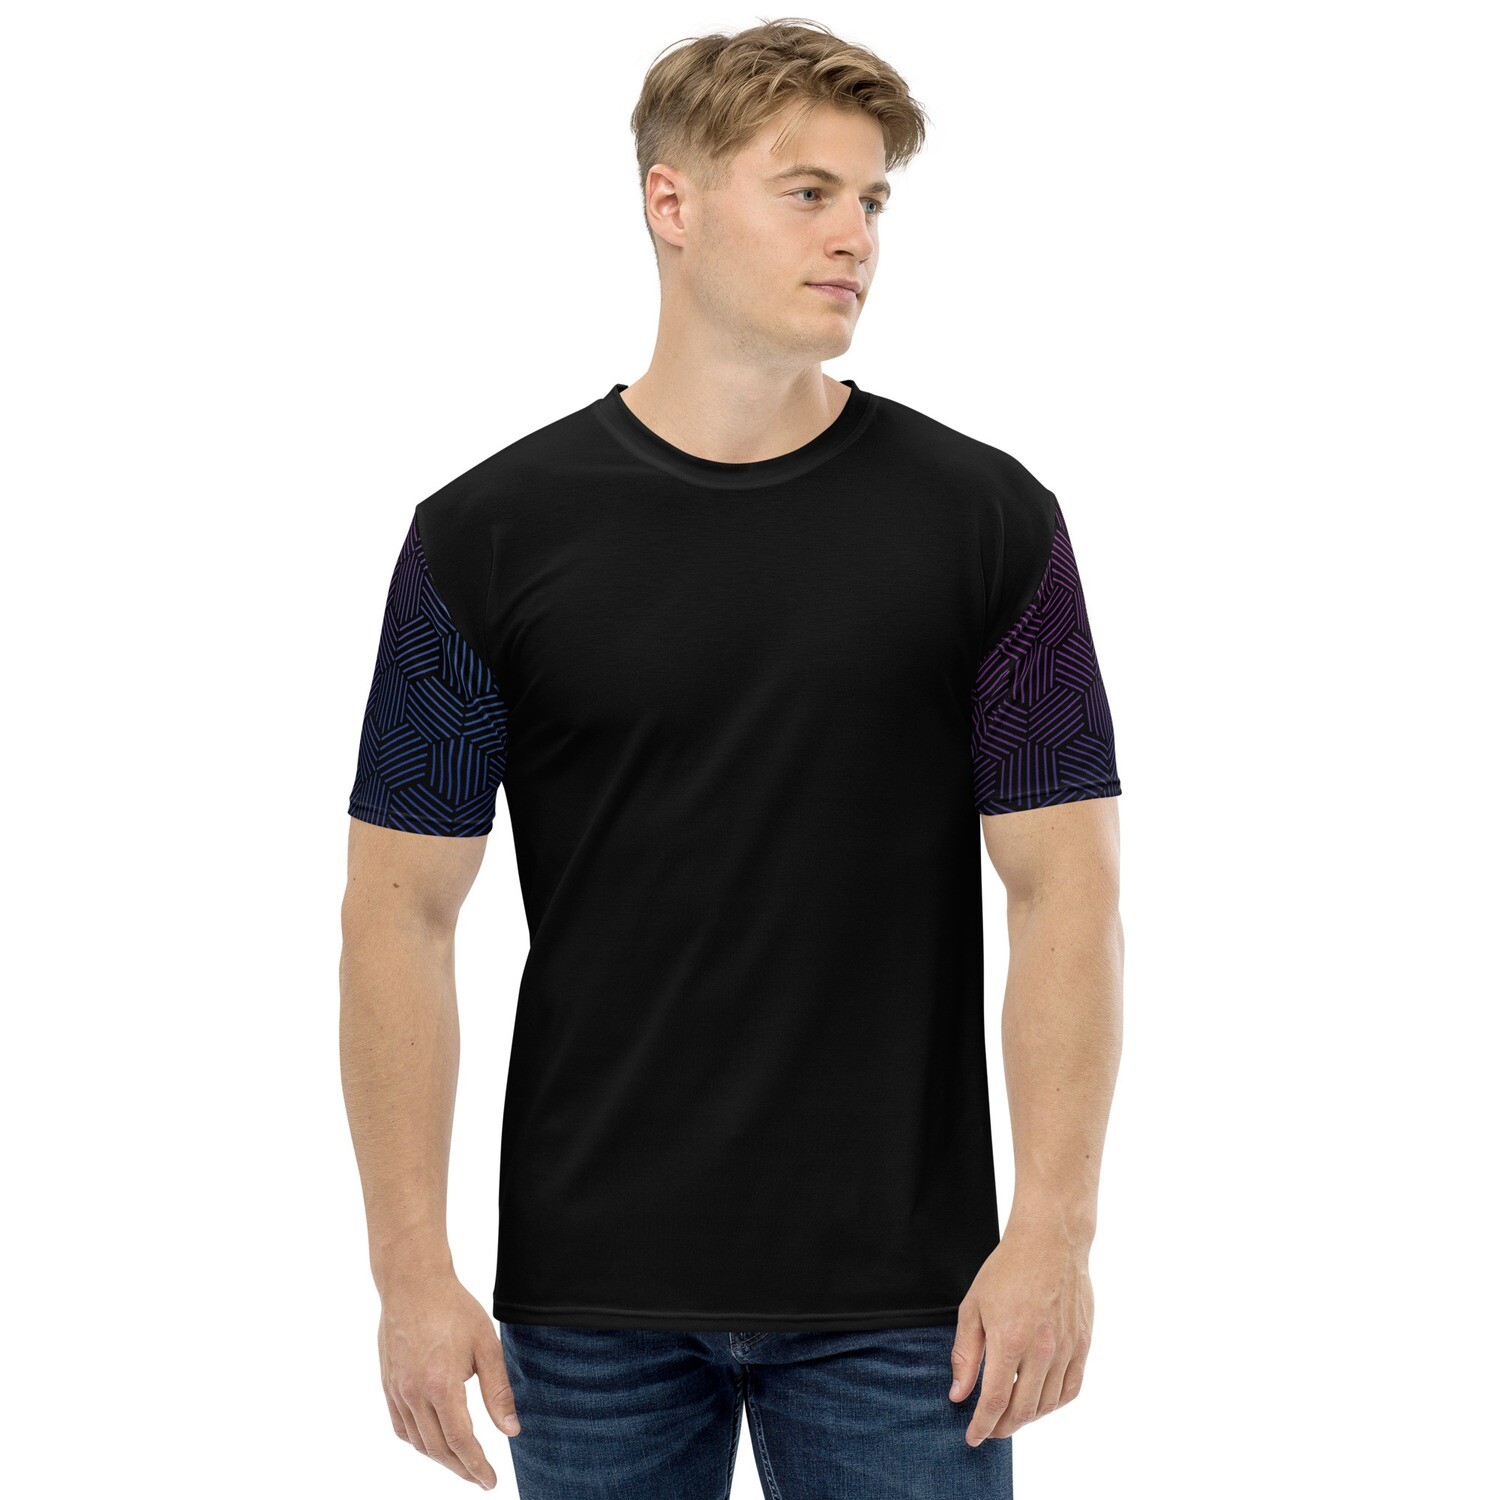 Pentagon T-shirt